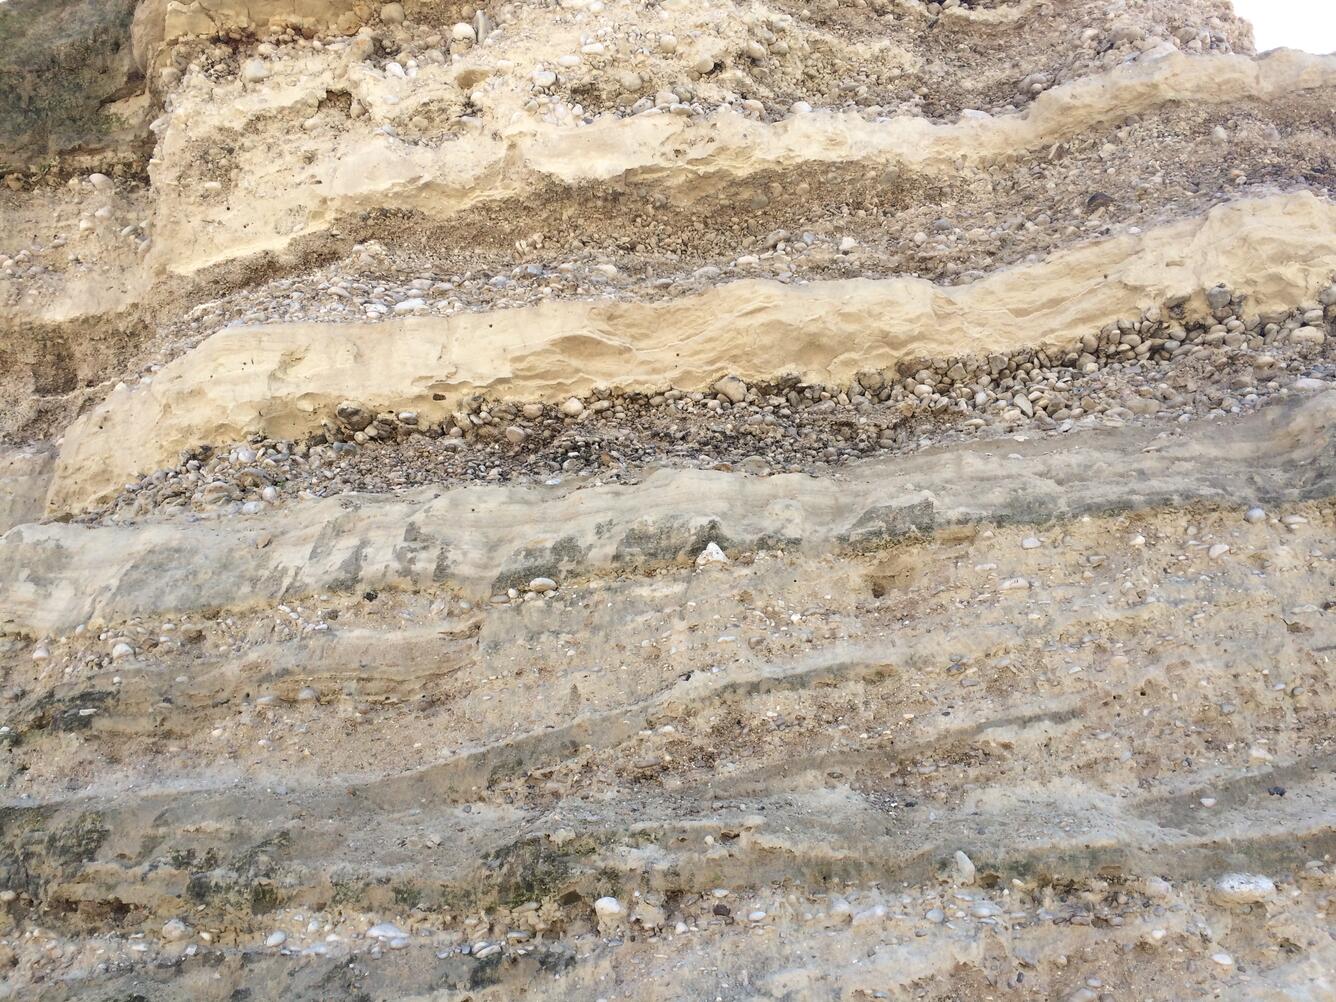 Photograph of alluvial fan deposits in the Jordan River Valley, Jordan